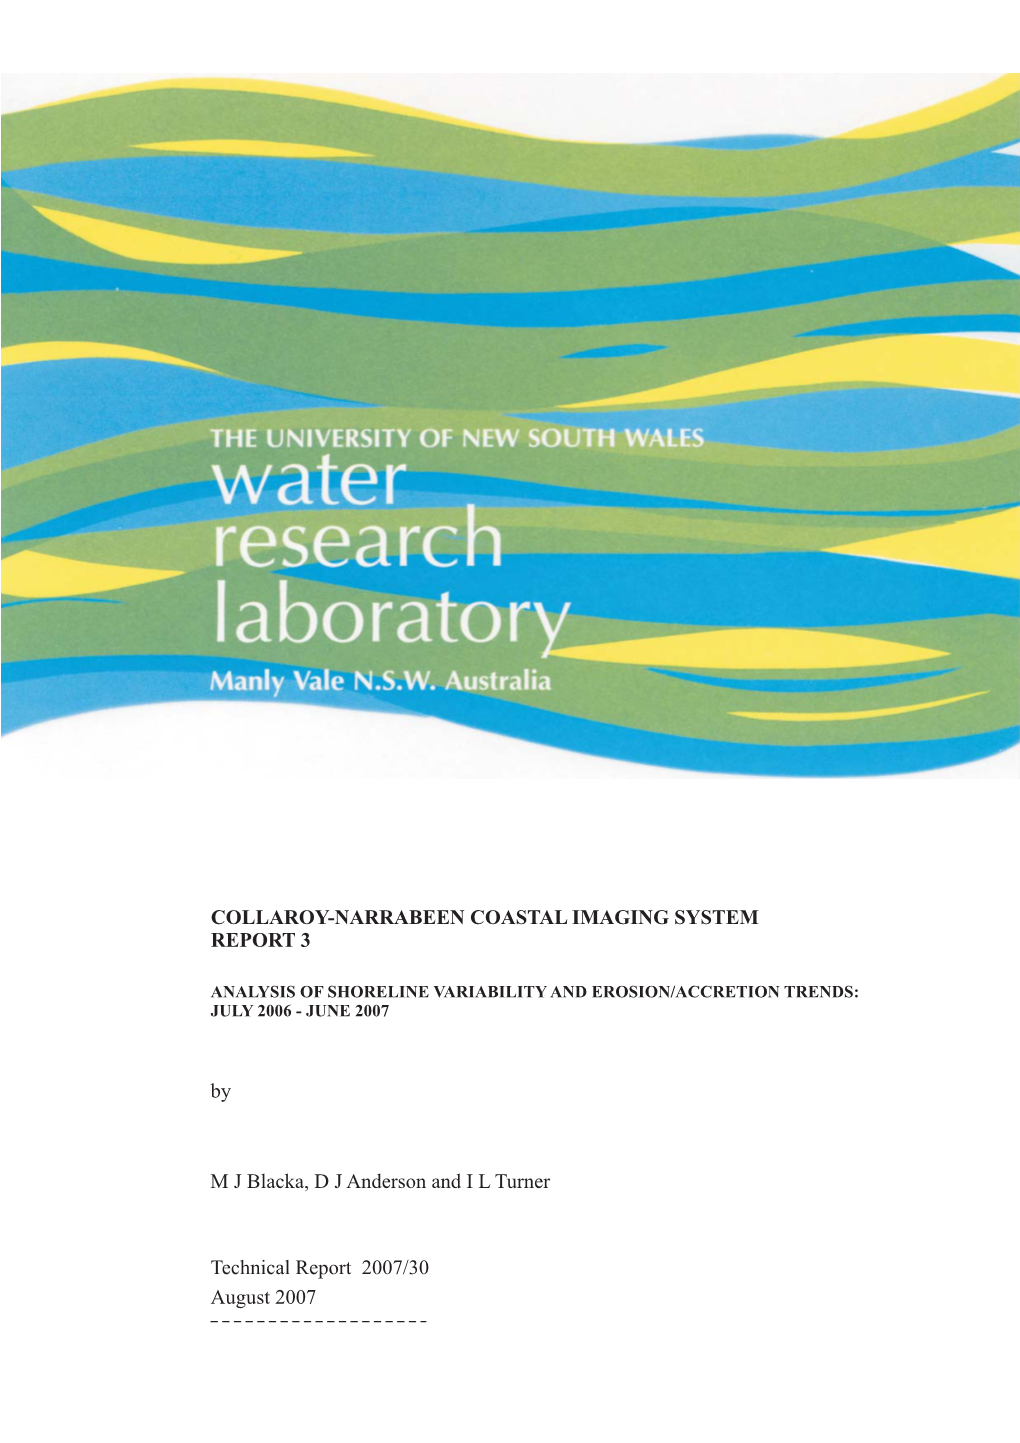 (2007) Collaroy-Narrabeen Coastal Imaging System Report 3, Analysis